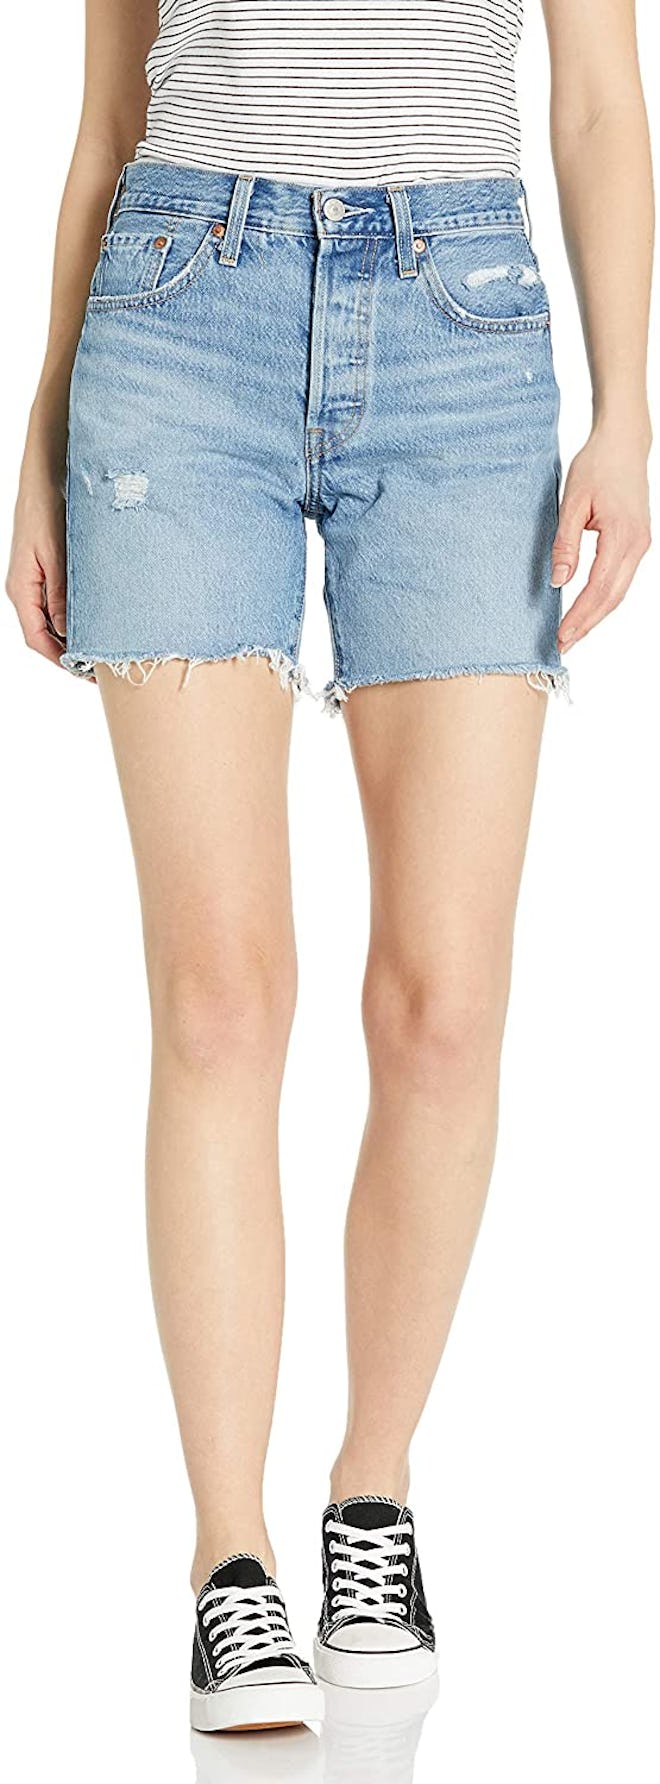 Levi's Premium 501 Mid-Thigh Shorts